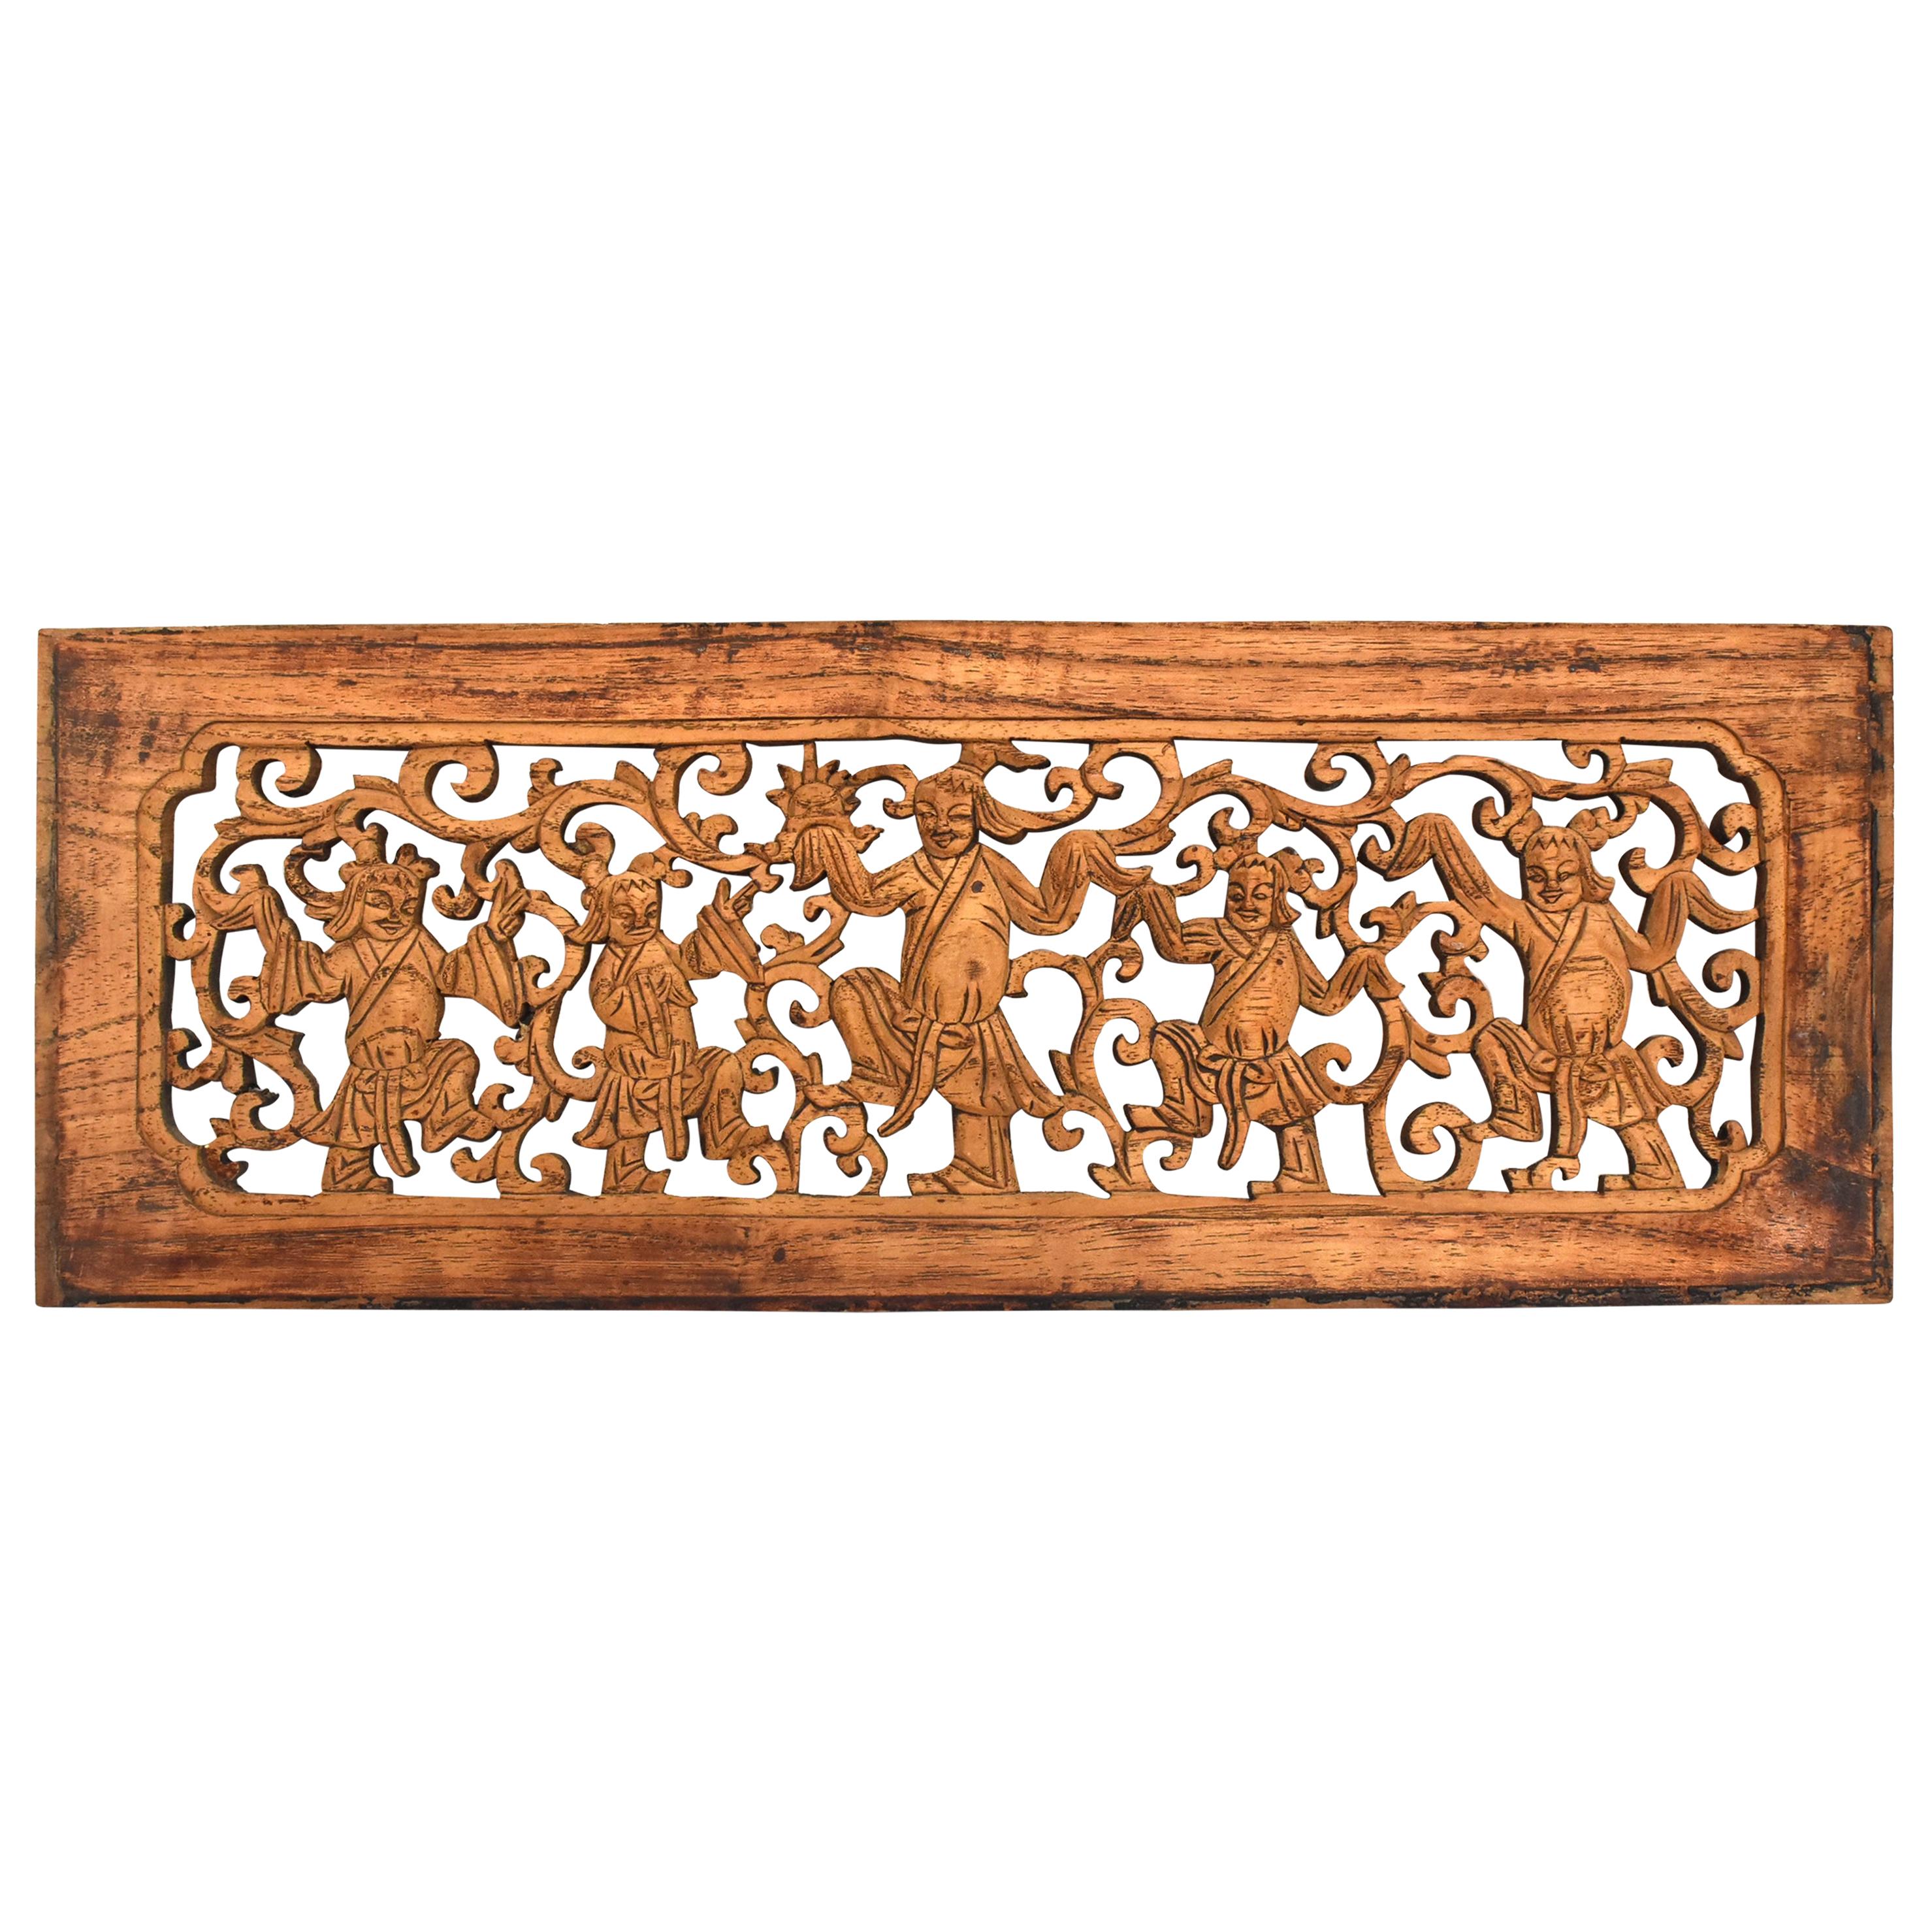 Antique Wood Carving Panel, Dancers